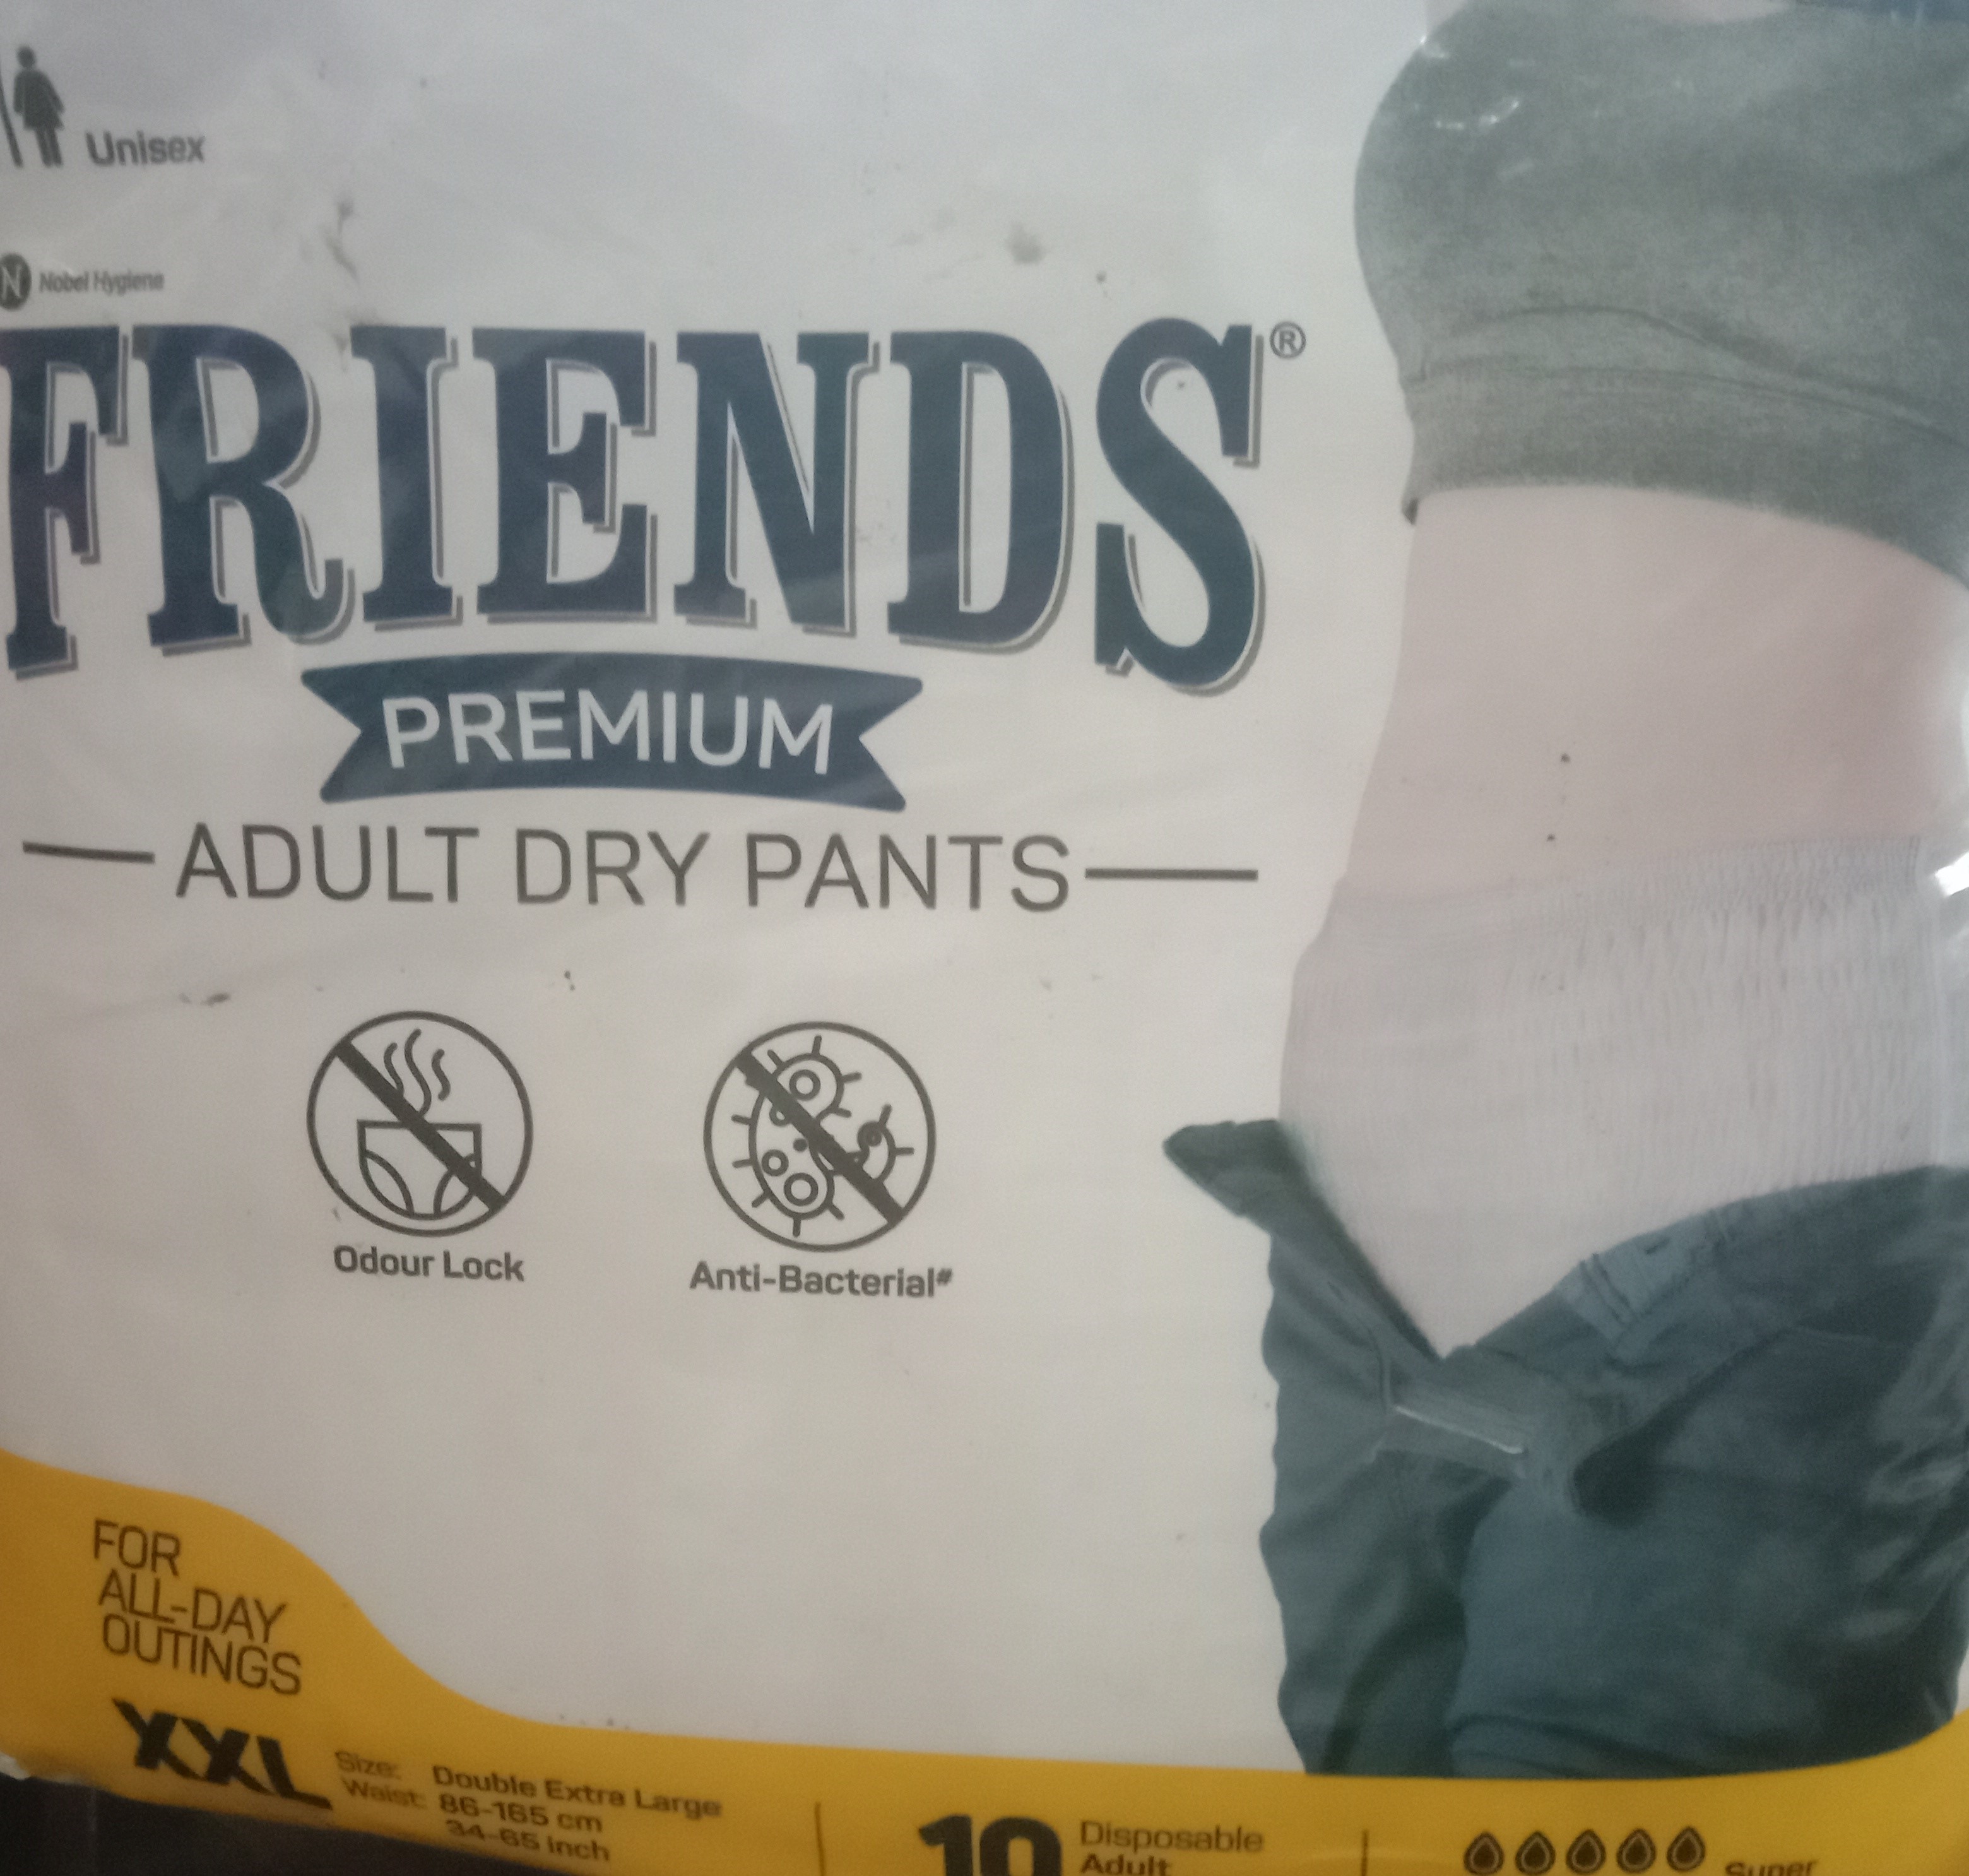 Friends Classic Adult Dry Pants